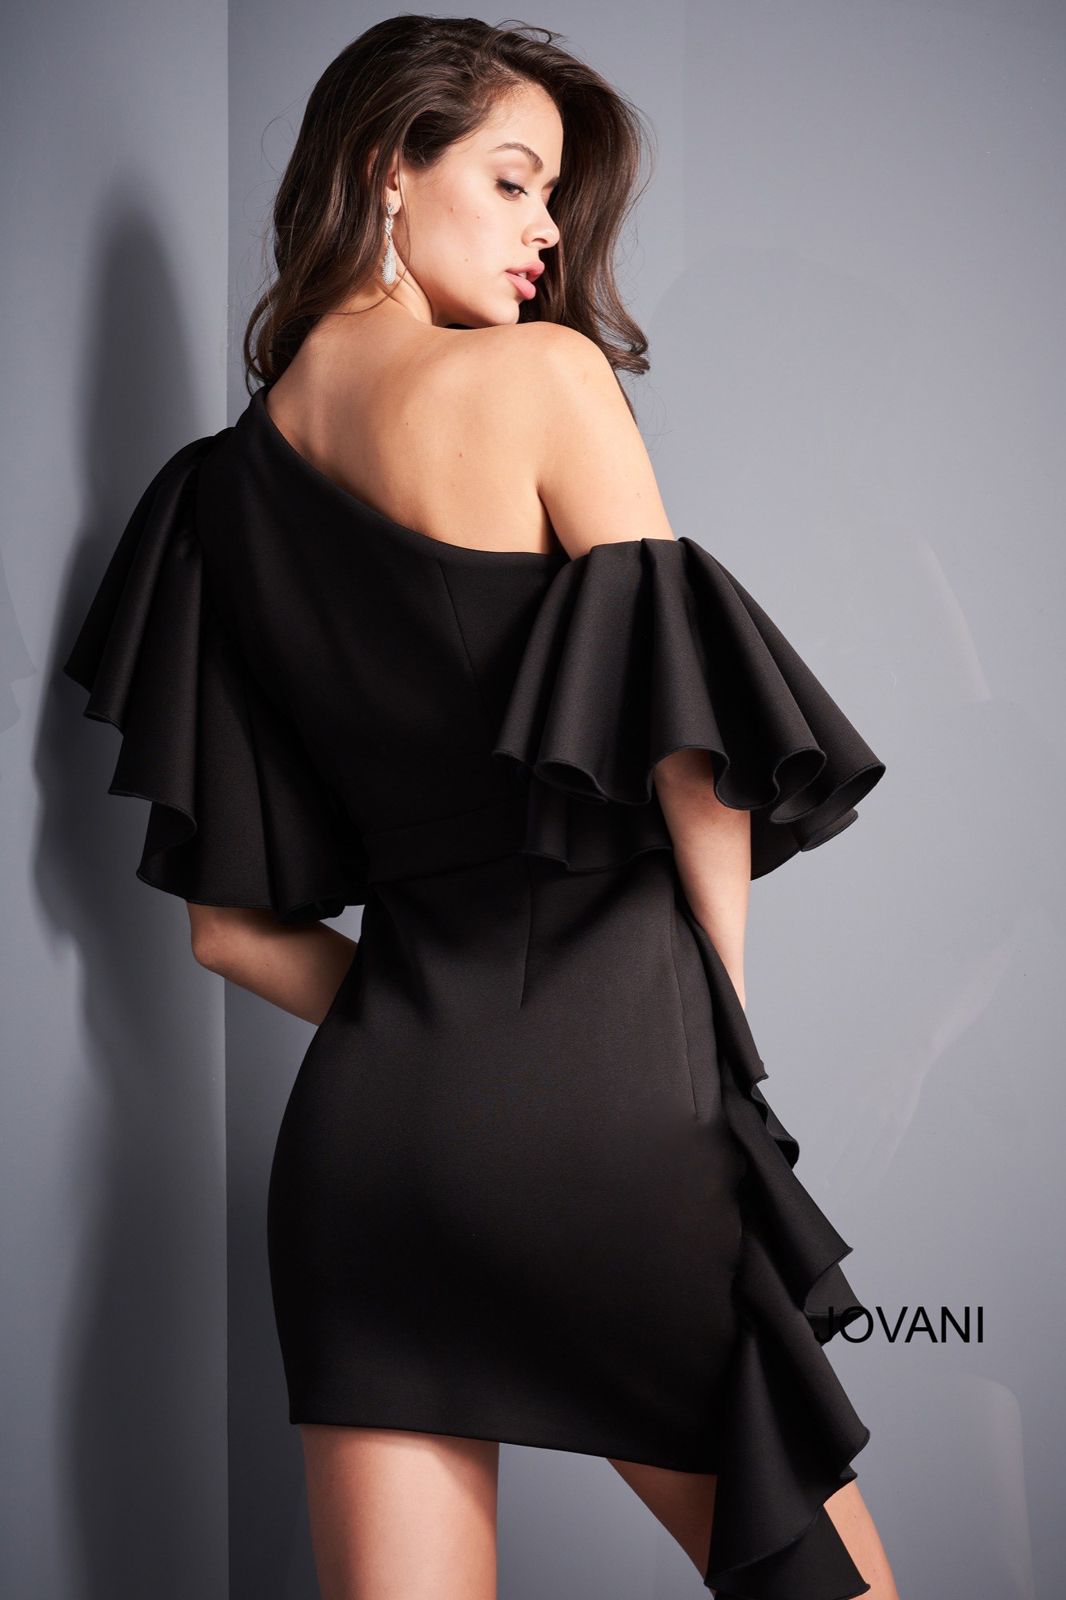 Jovani - Ruffle Sleeve Cocktail Dress Black